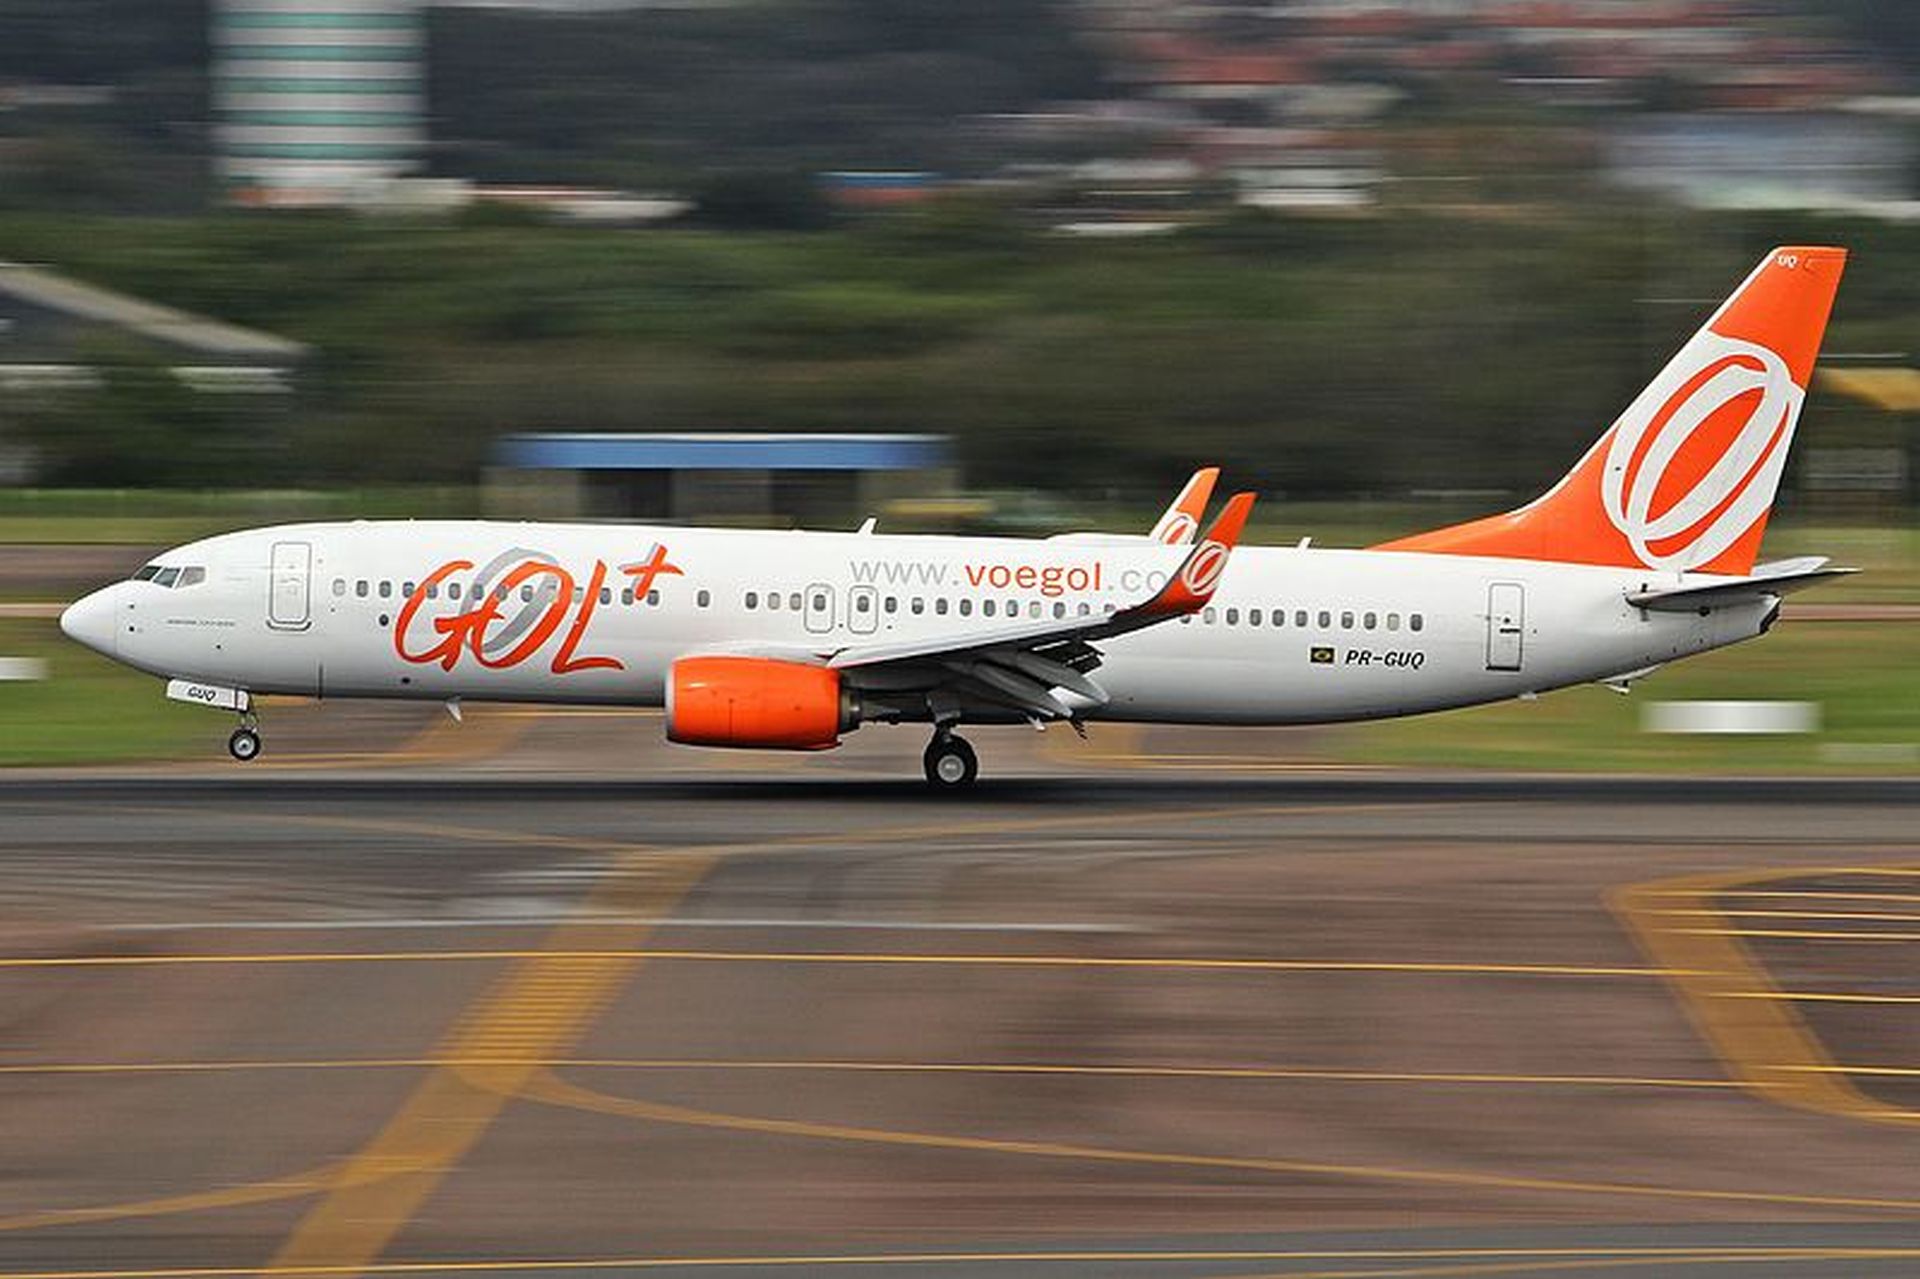 Boeing 737-800 společnosti Gol. Foto: Rafael Luiz Canossa [CC BY-SA 2.0 (https://creativecommons.org/licenses/by-sa/2.0)]